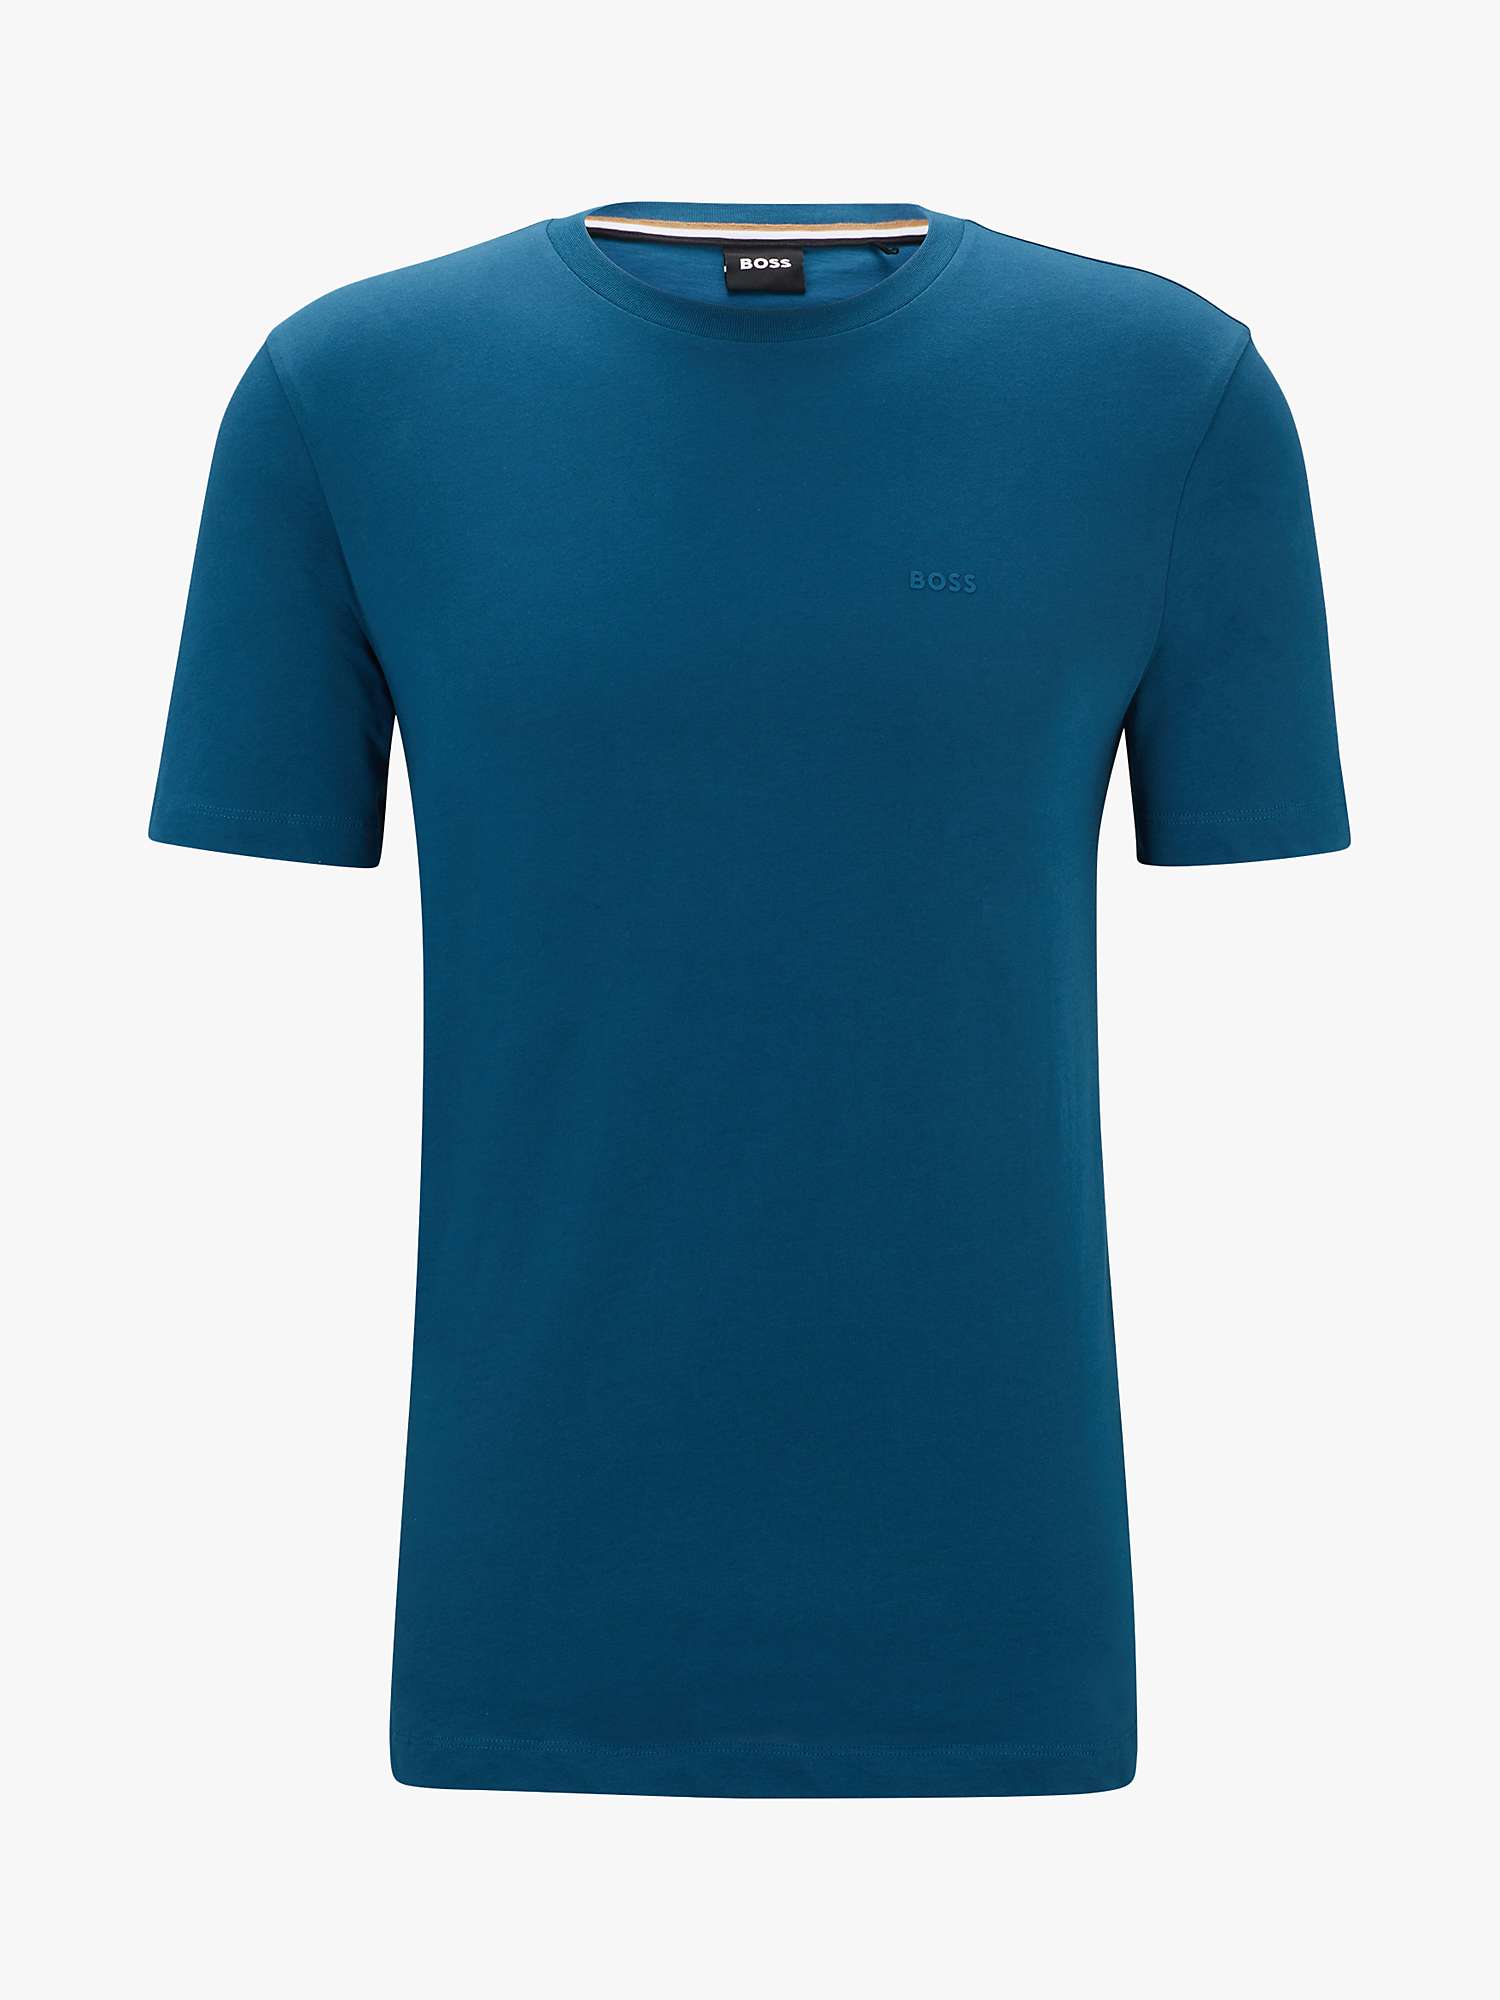 Buy BOSS Thompson Short Sleeve T-Shirt, Open Blue Online at johnlewis.com